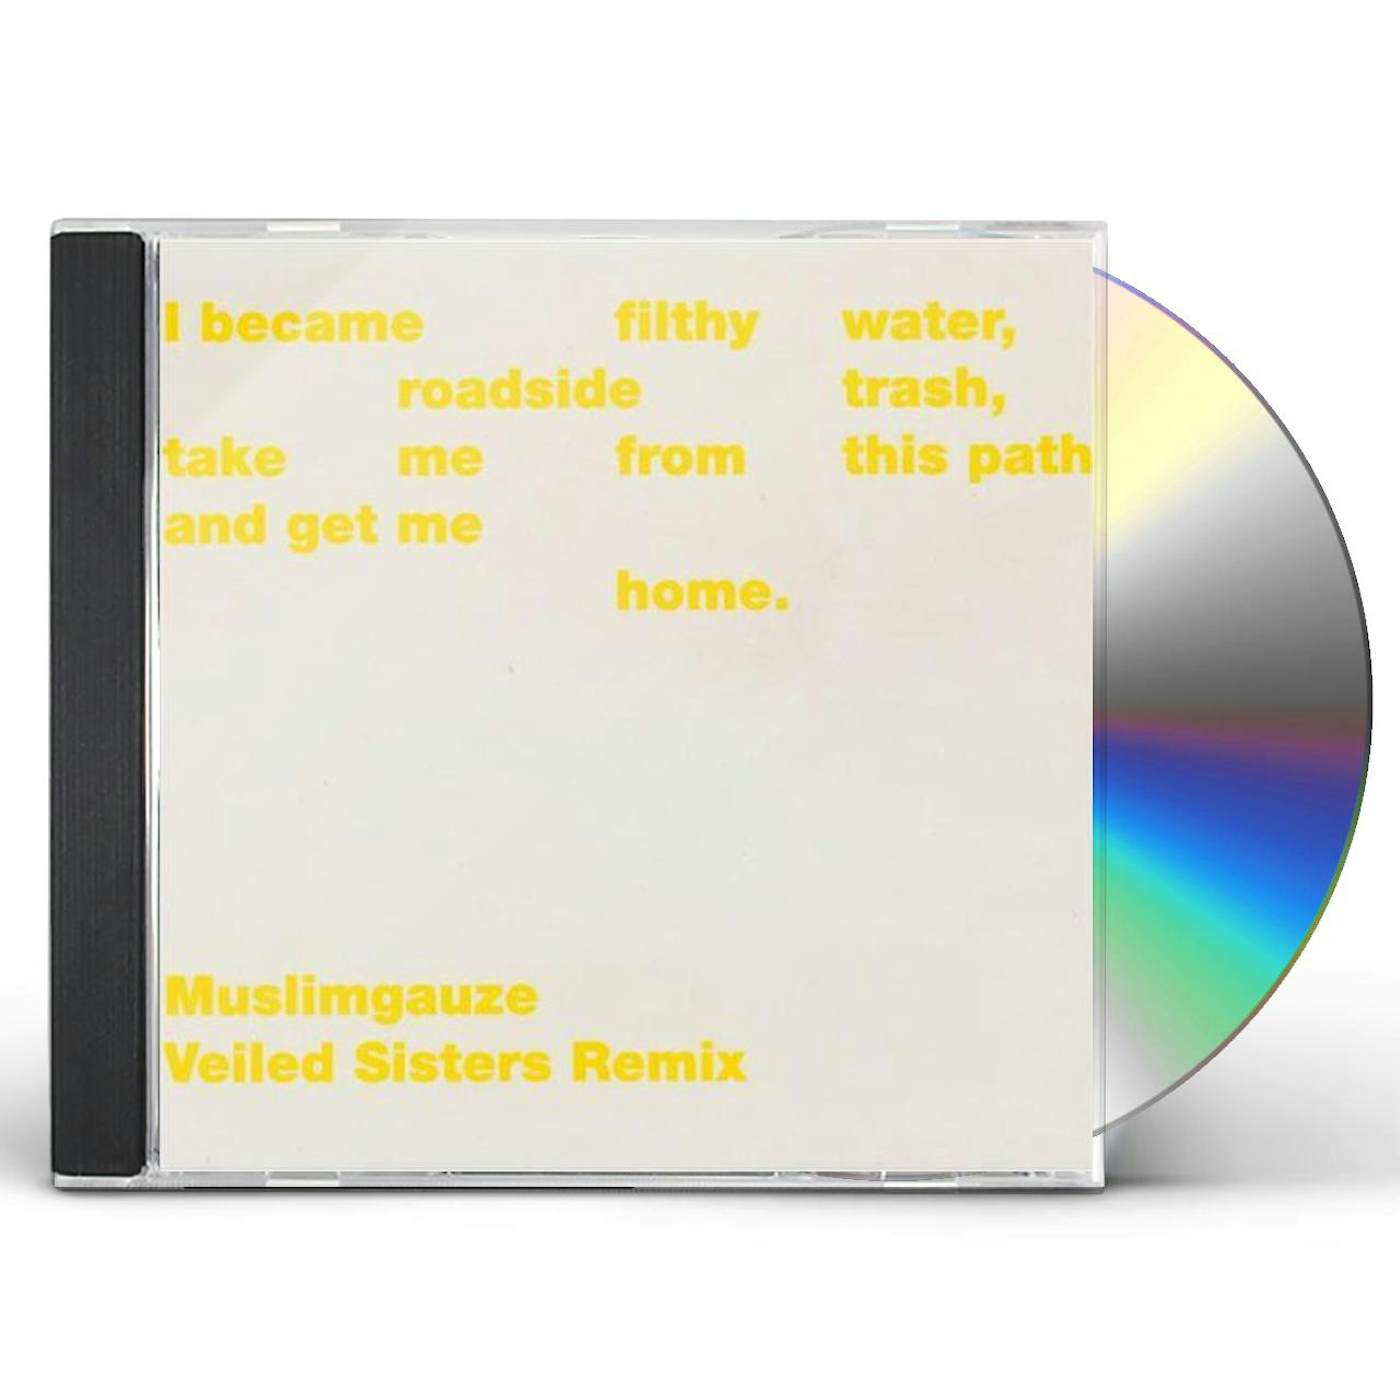 Muslimgauze VEILED SISTERS REMIX CD